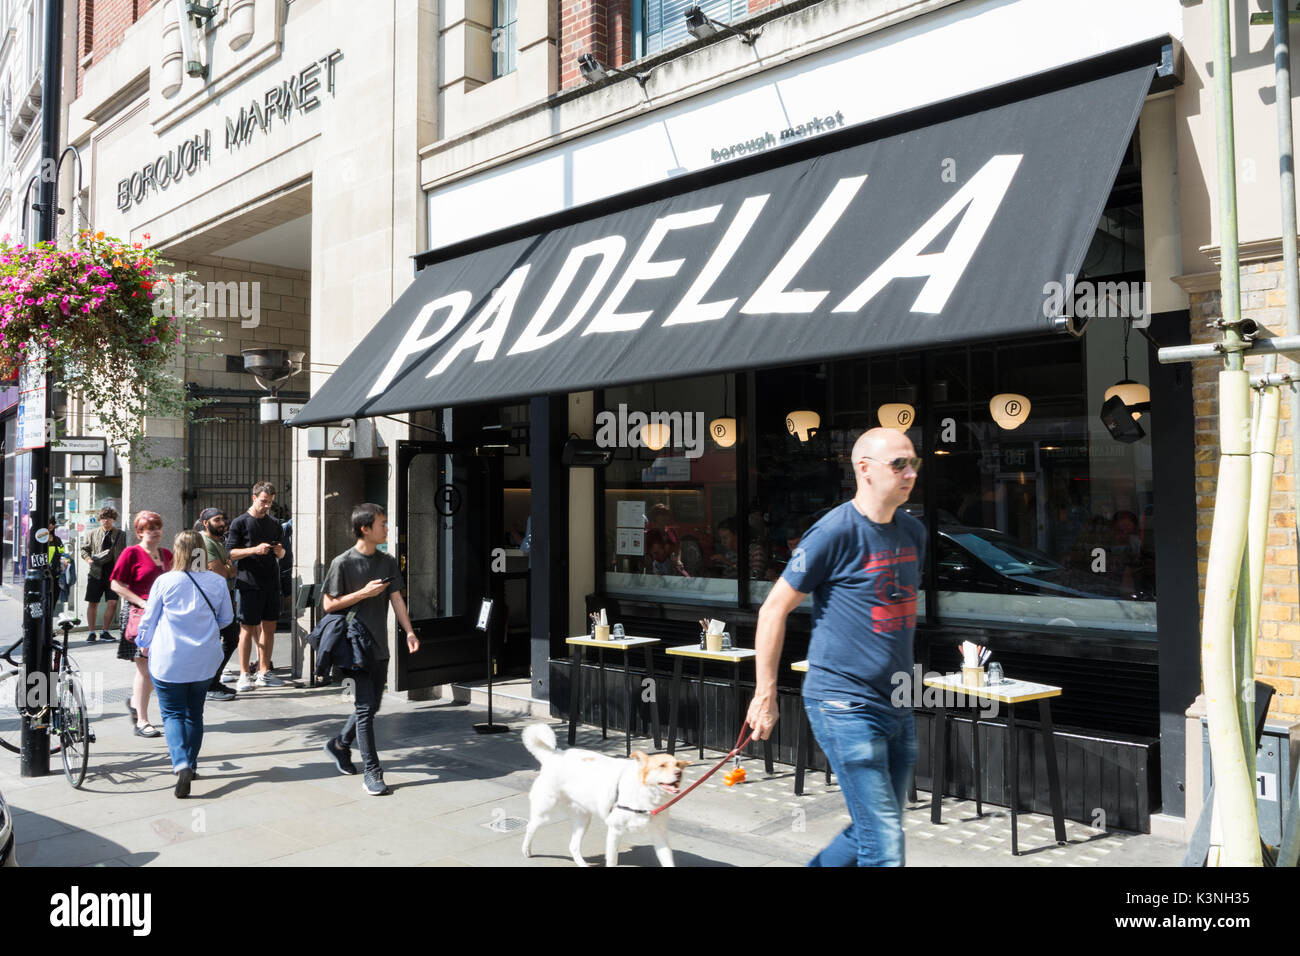 Padella, a modern Italian bistro in Borough Market, in Southwark Street, London, SE1, UK Stock Photo